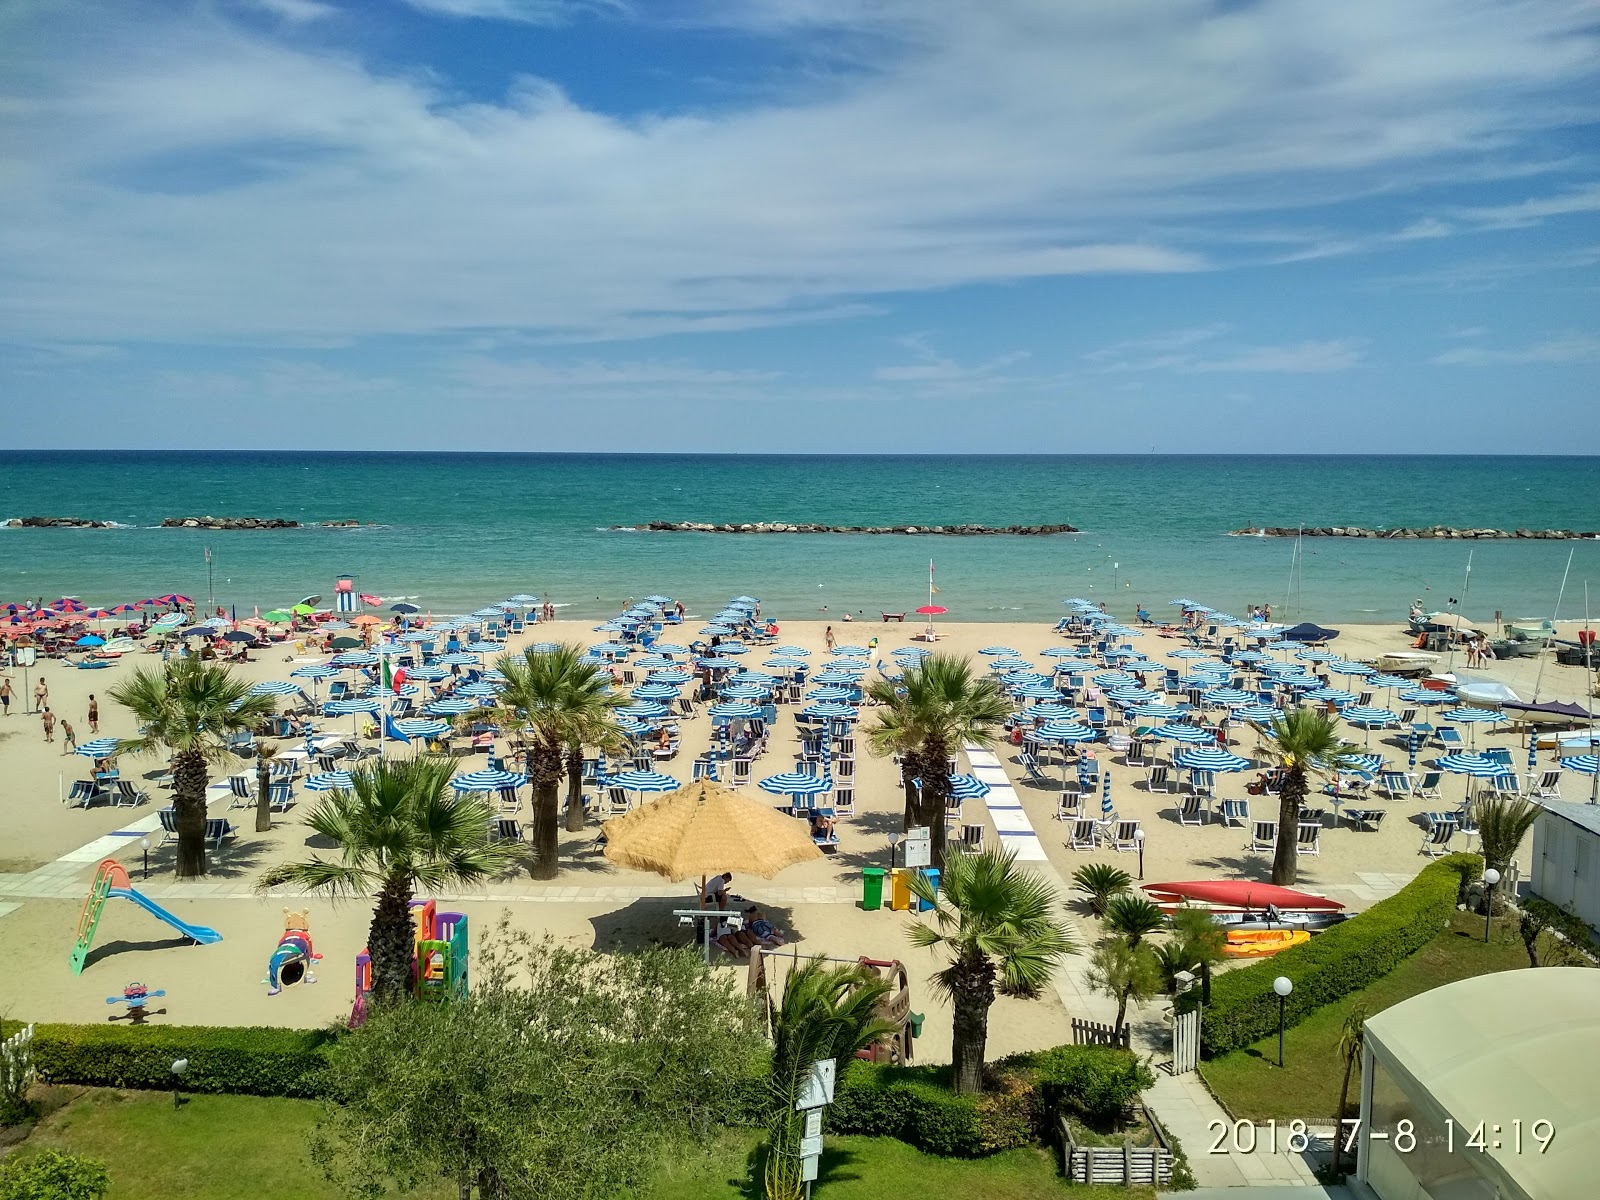 Spiaggia Campo Europa'in fotoğrafı parlak ince kum yüzey ile